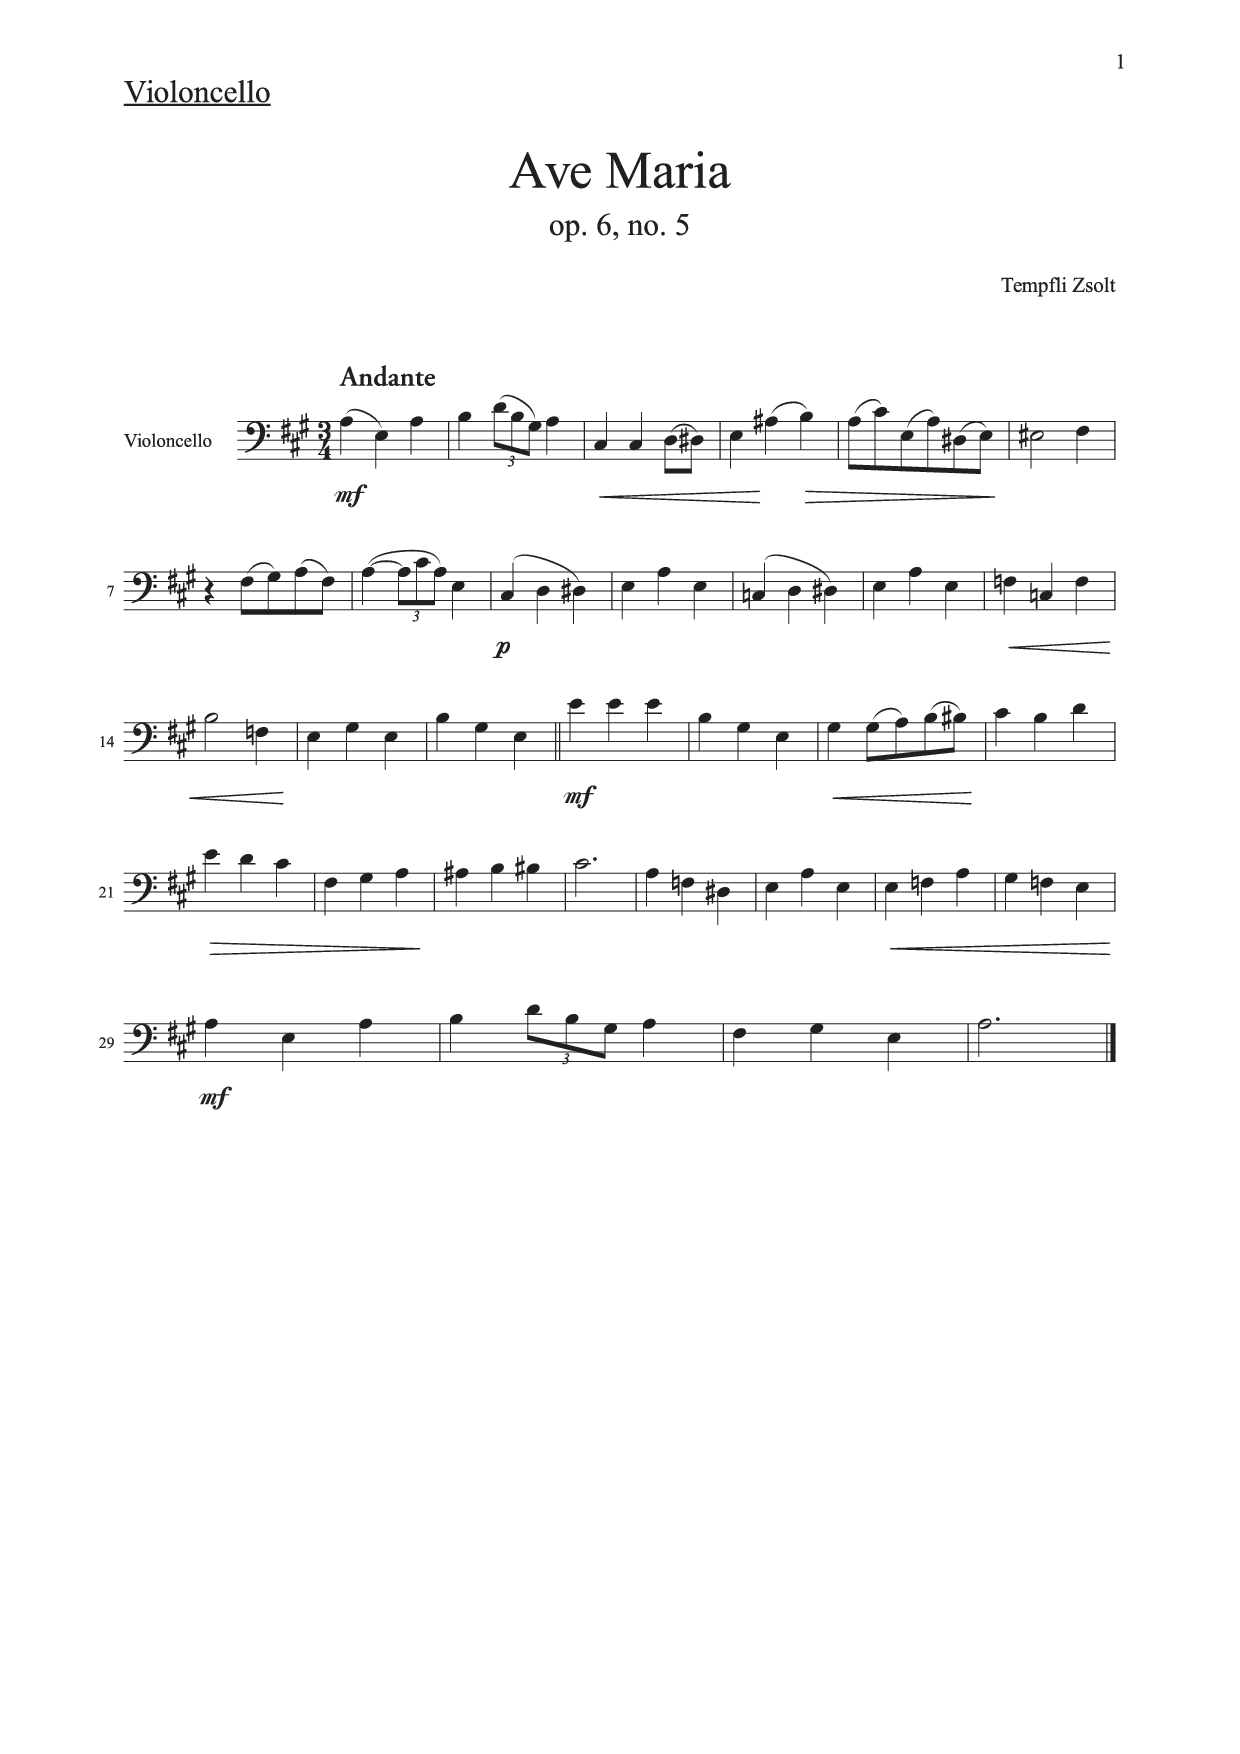 Zsolt Tempfli - Ave Maria no. 5 Violoncello